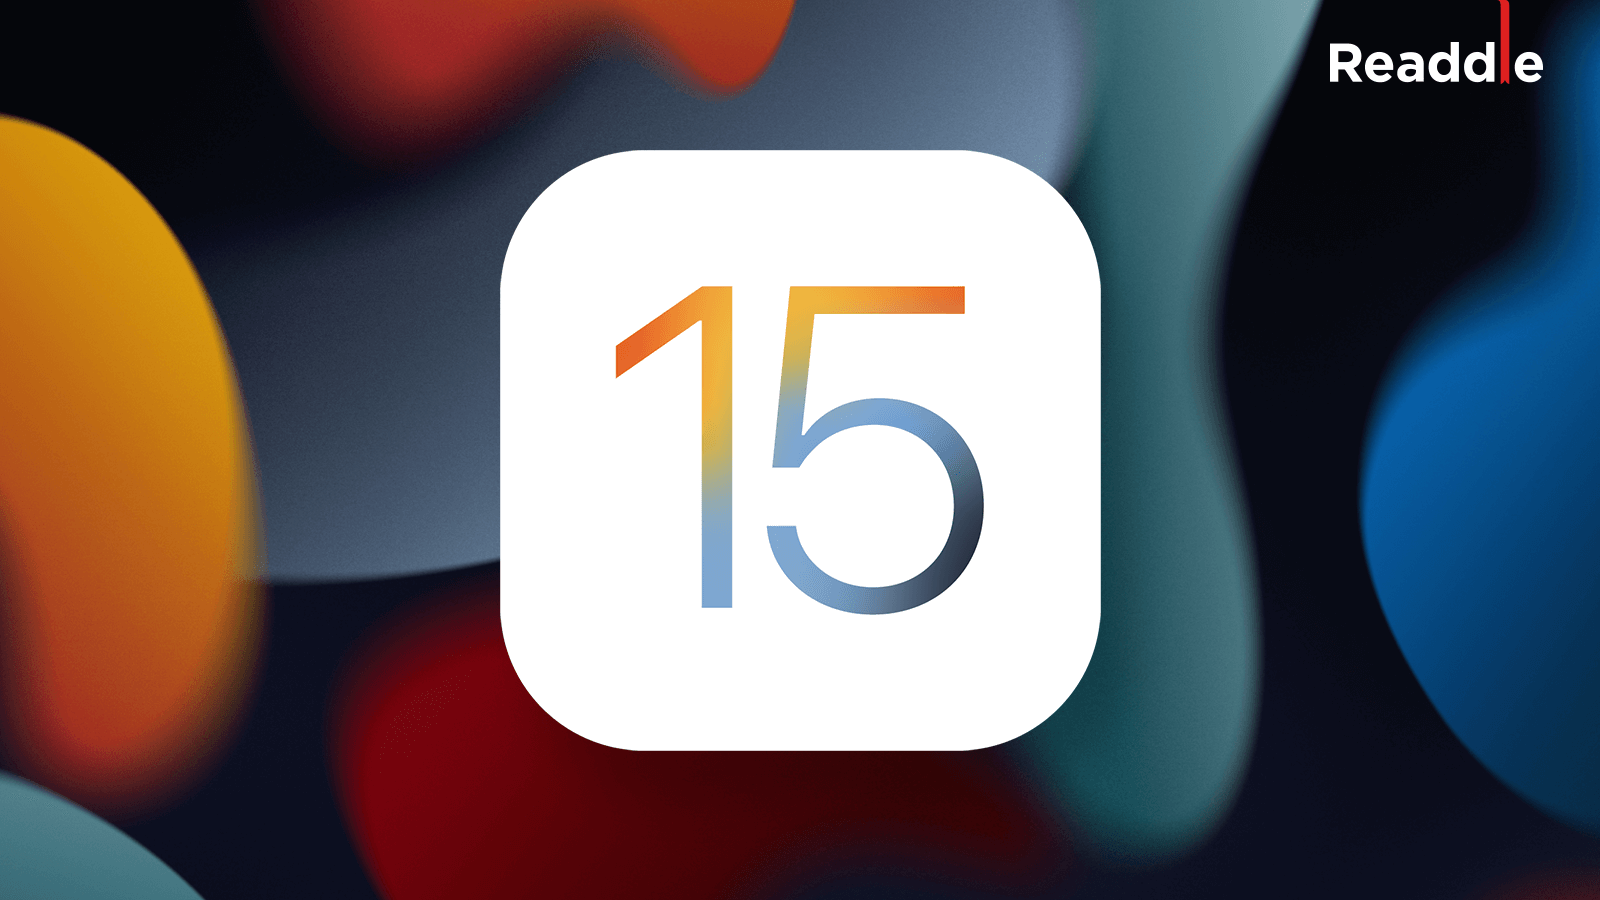 Readdle productivity apps bring amazing iOS 15 updates